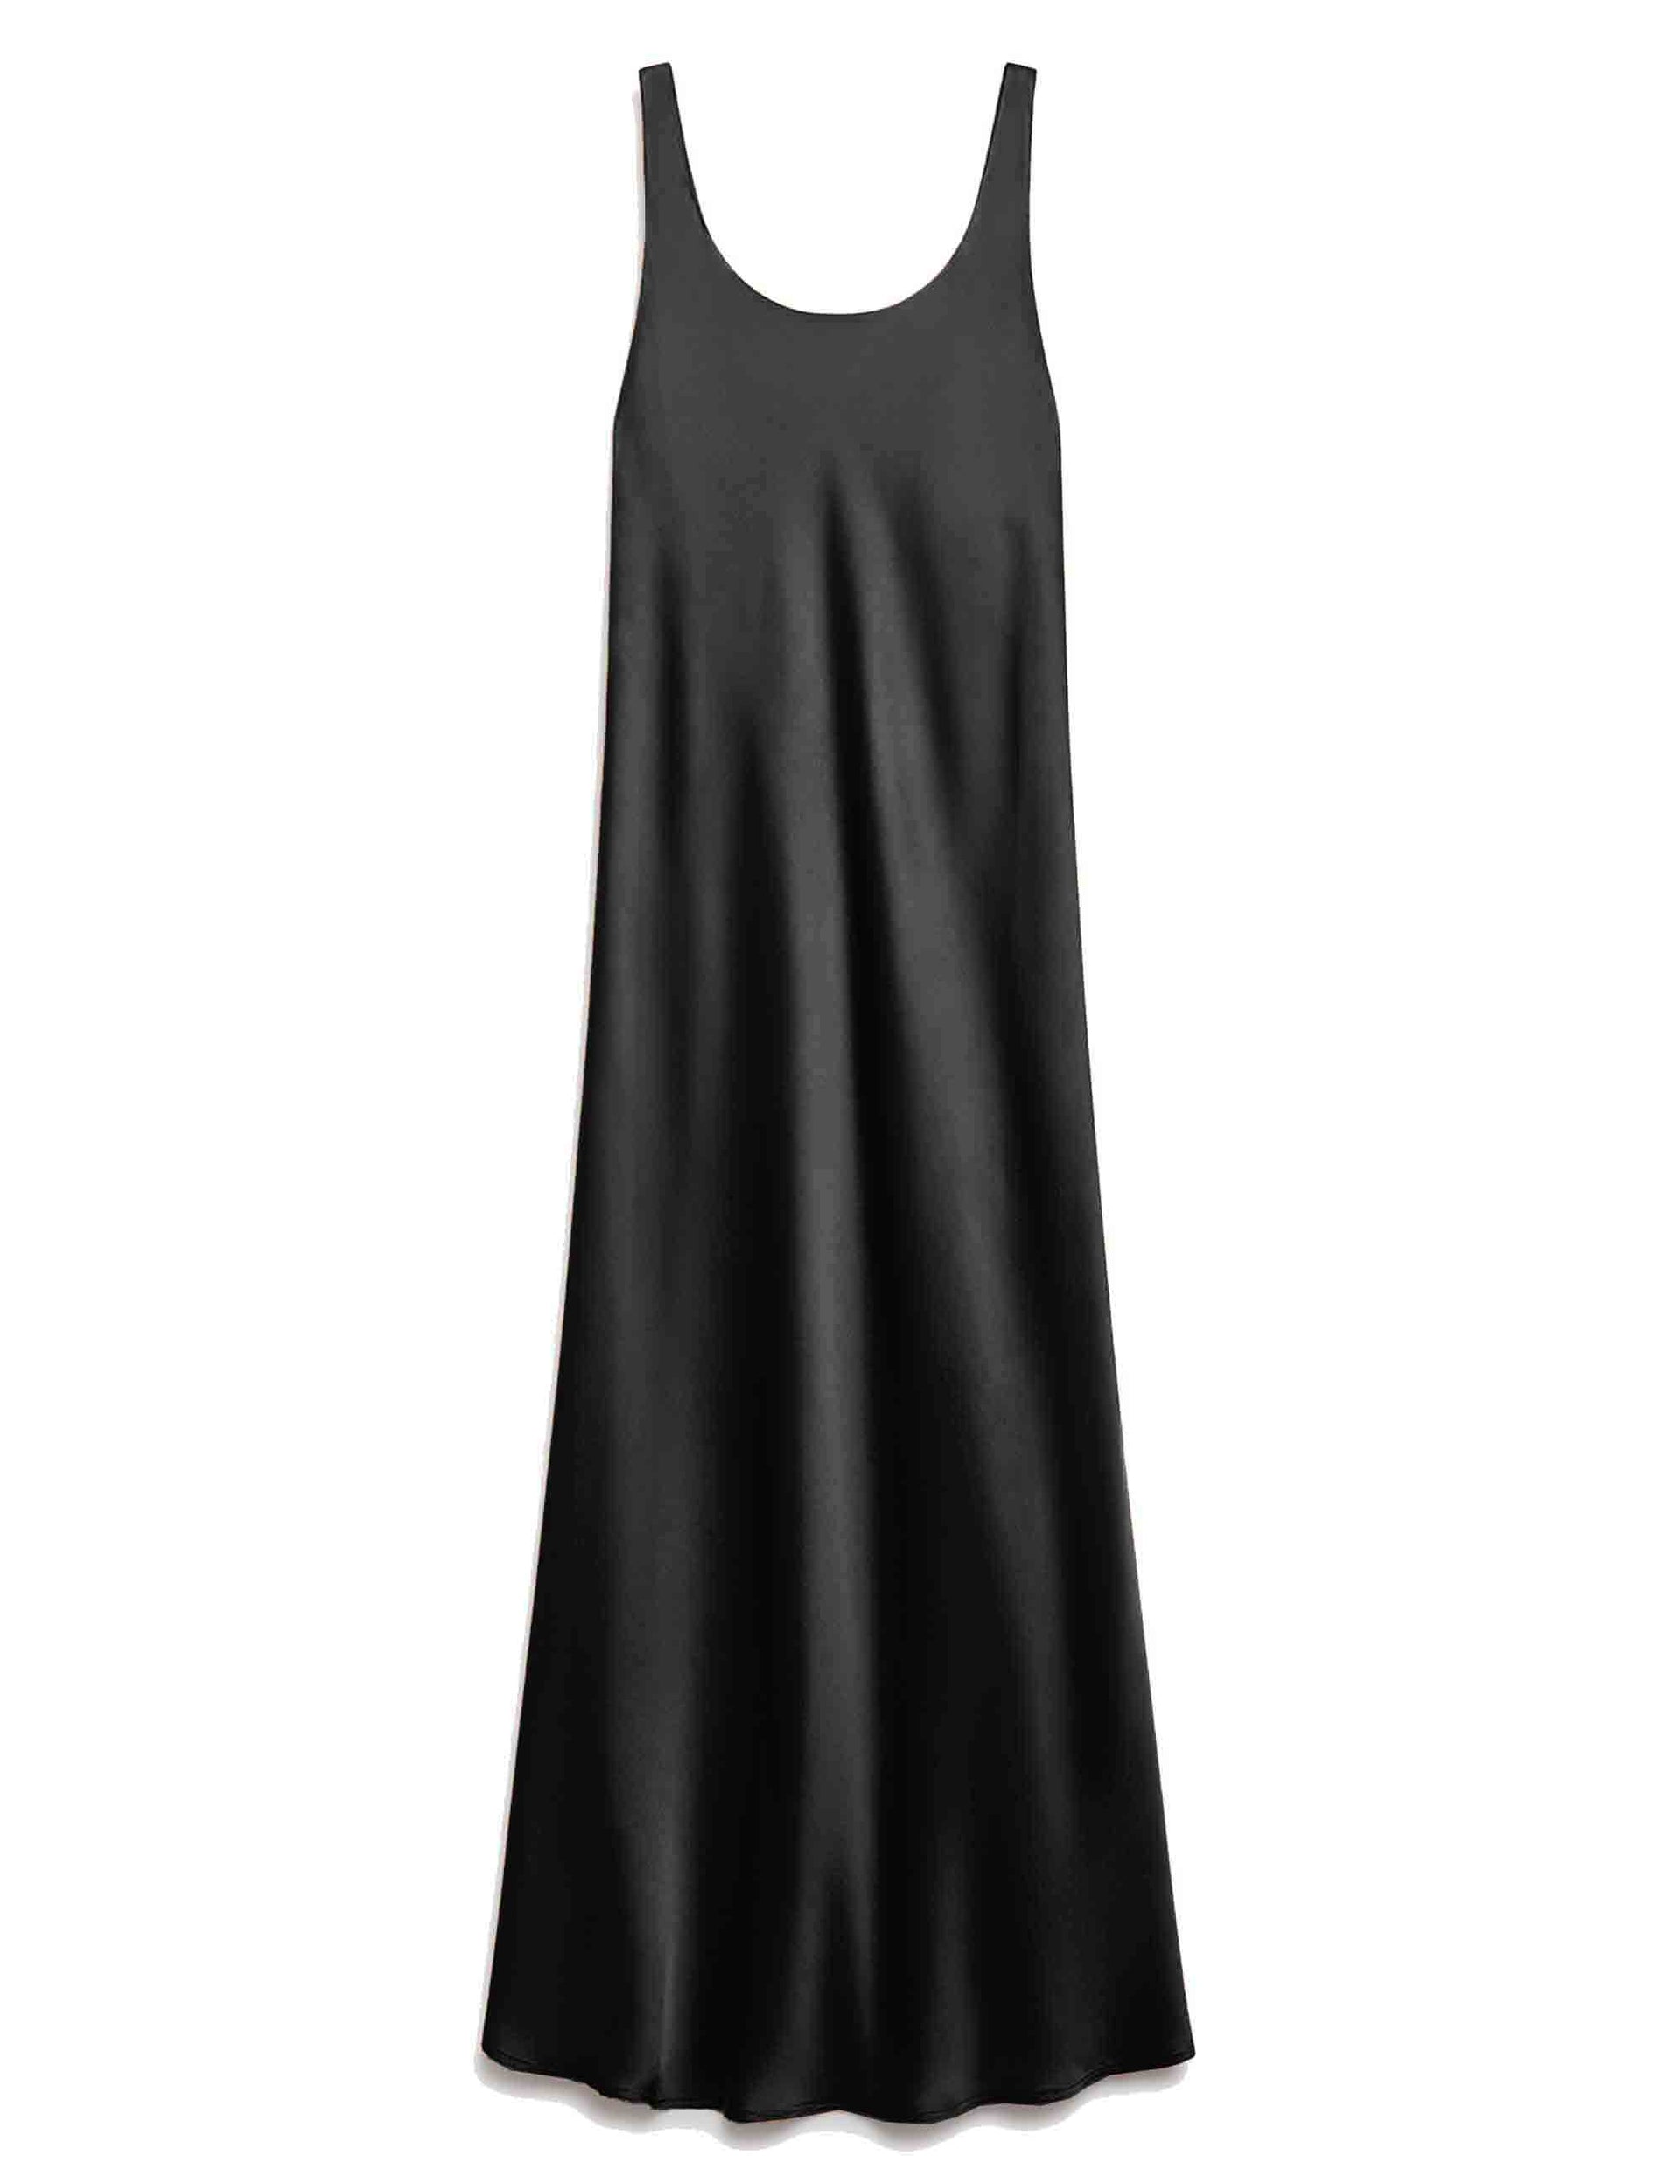 Shiny women's dresses in black cady